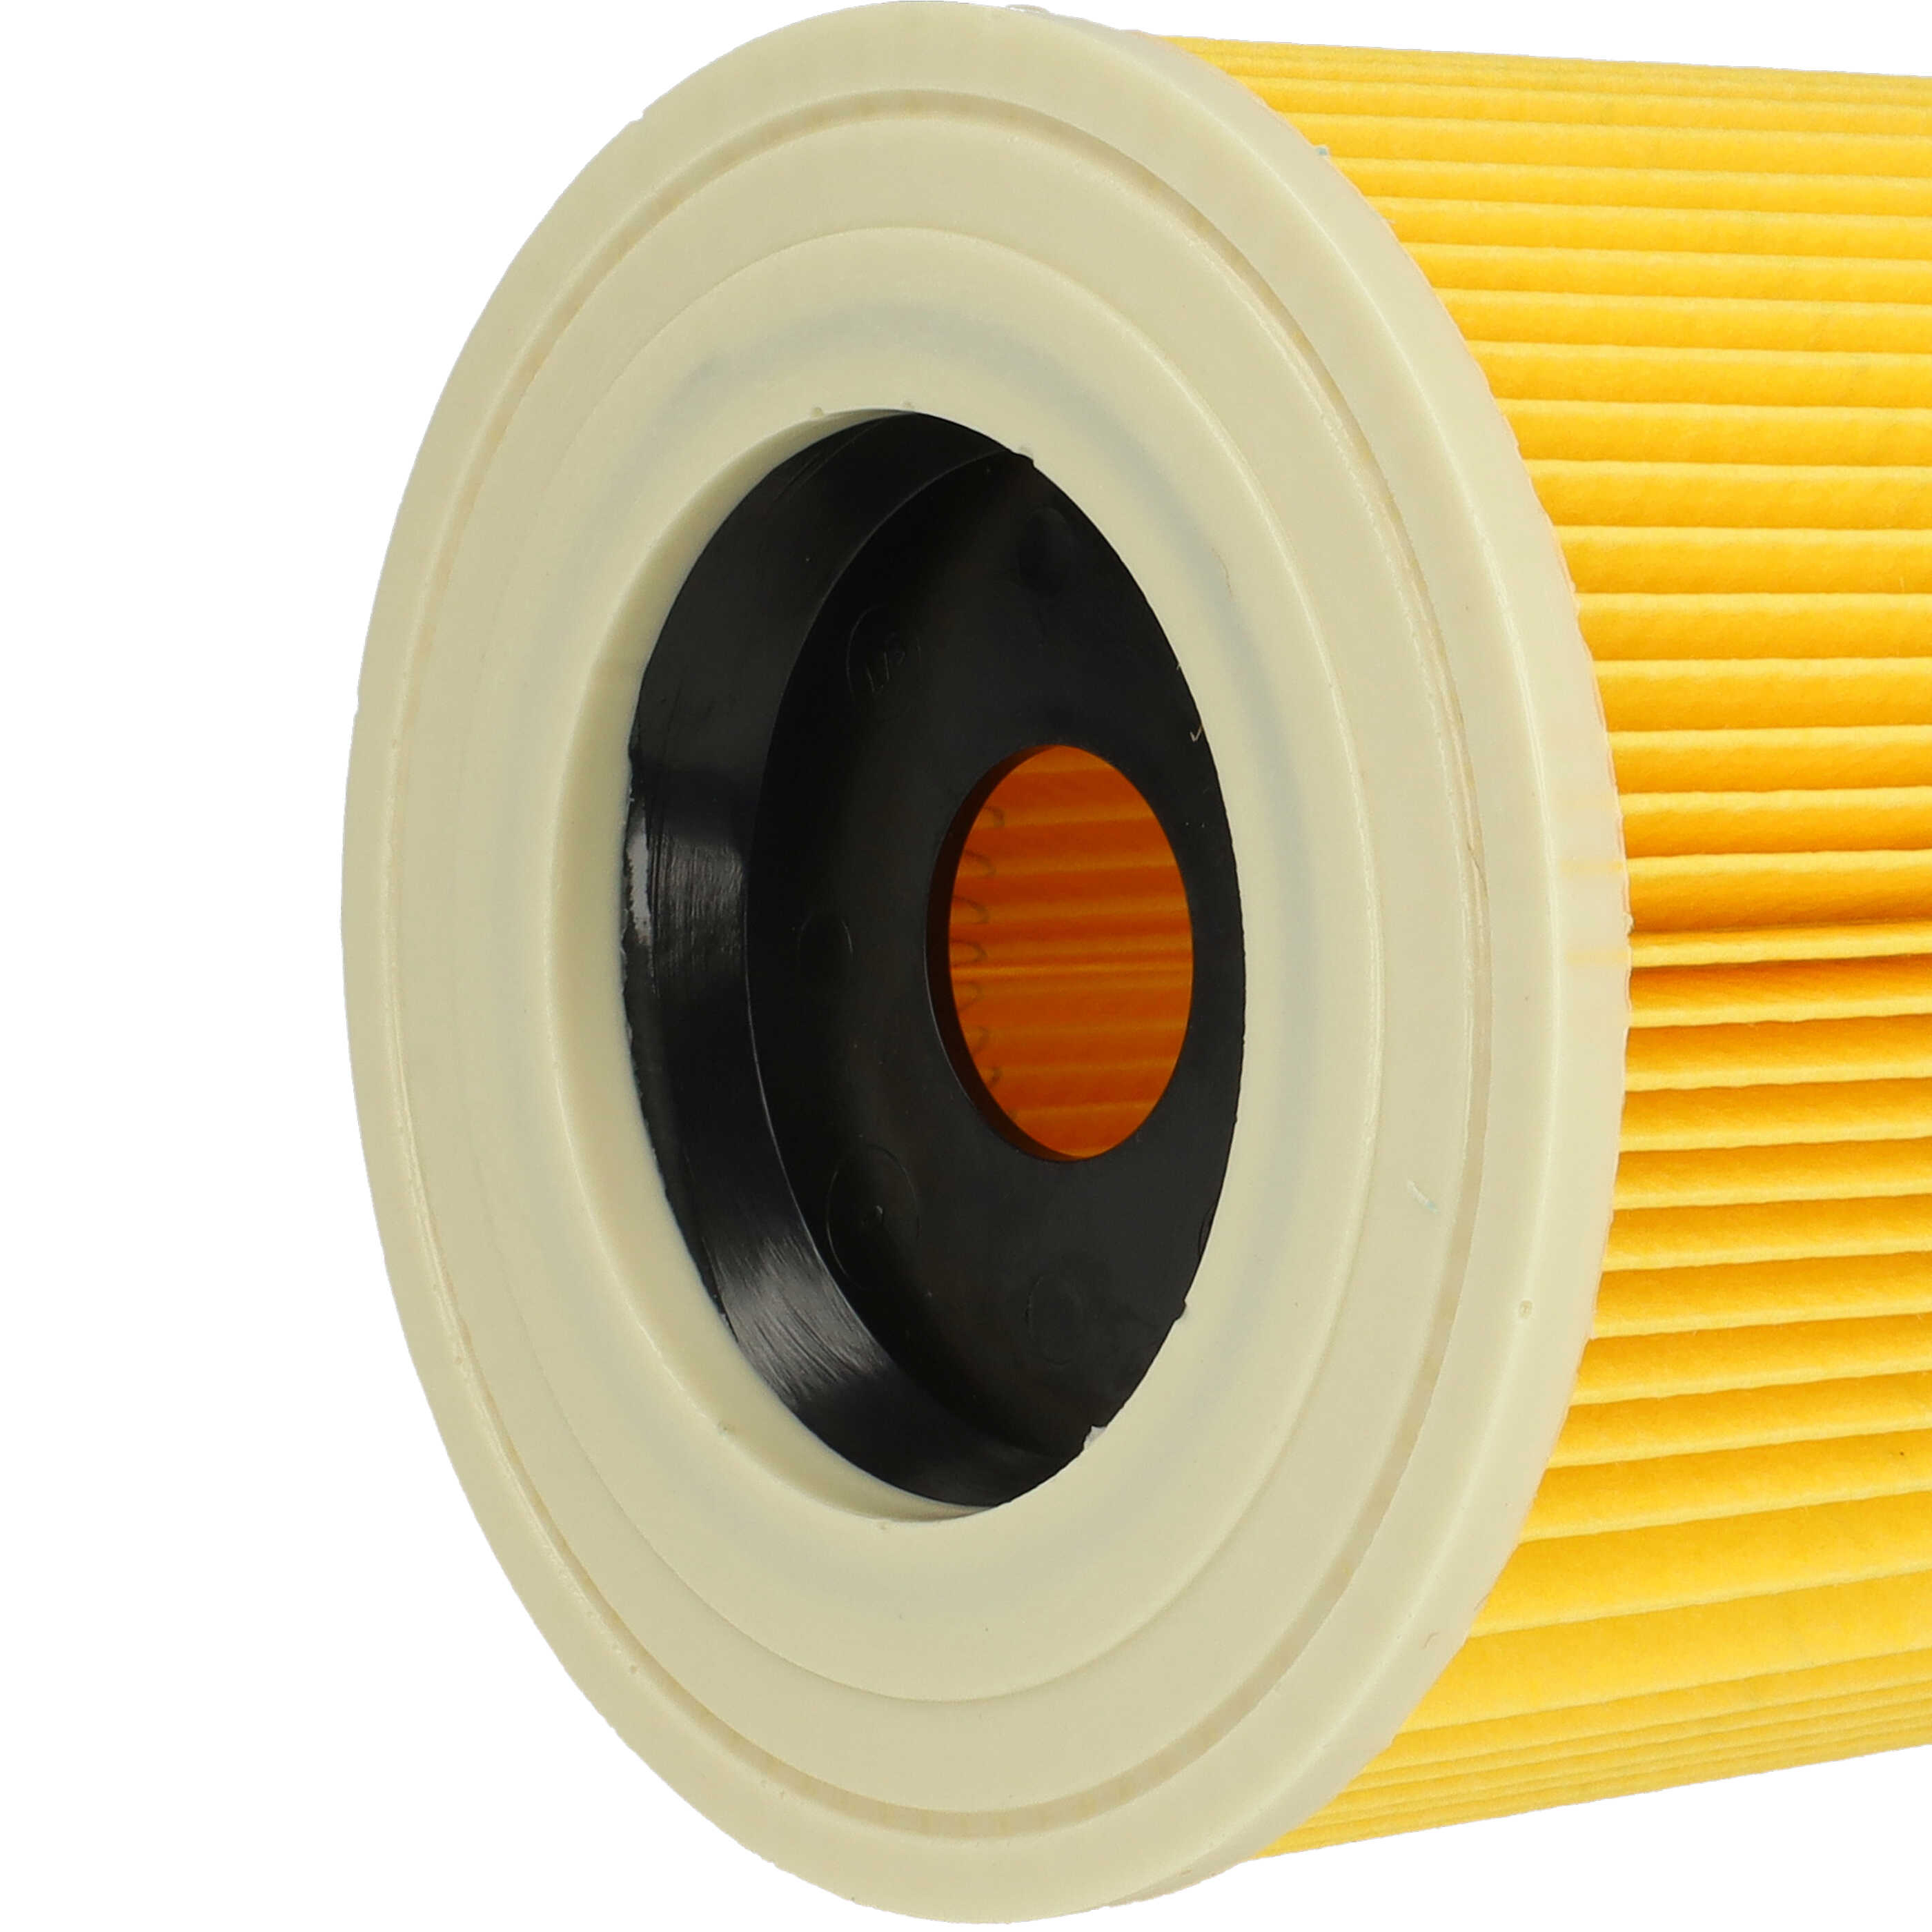 3x Filtro reemplaza Kärcher 2.863-303.0, 6.414-552.0, 6.414-547.0 para aspiradora filtro de cartucho, amarillo